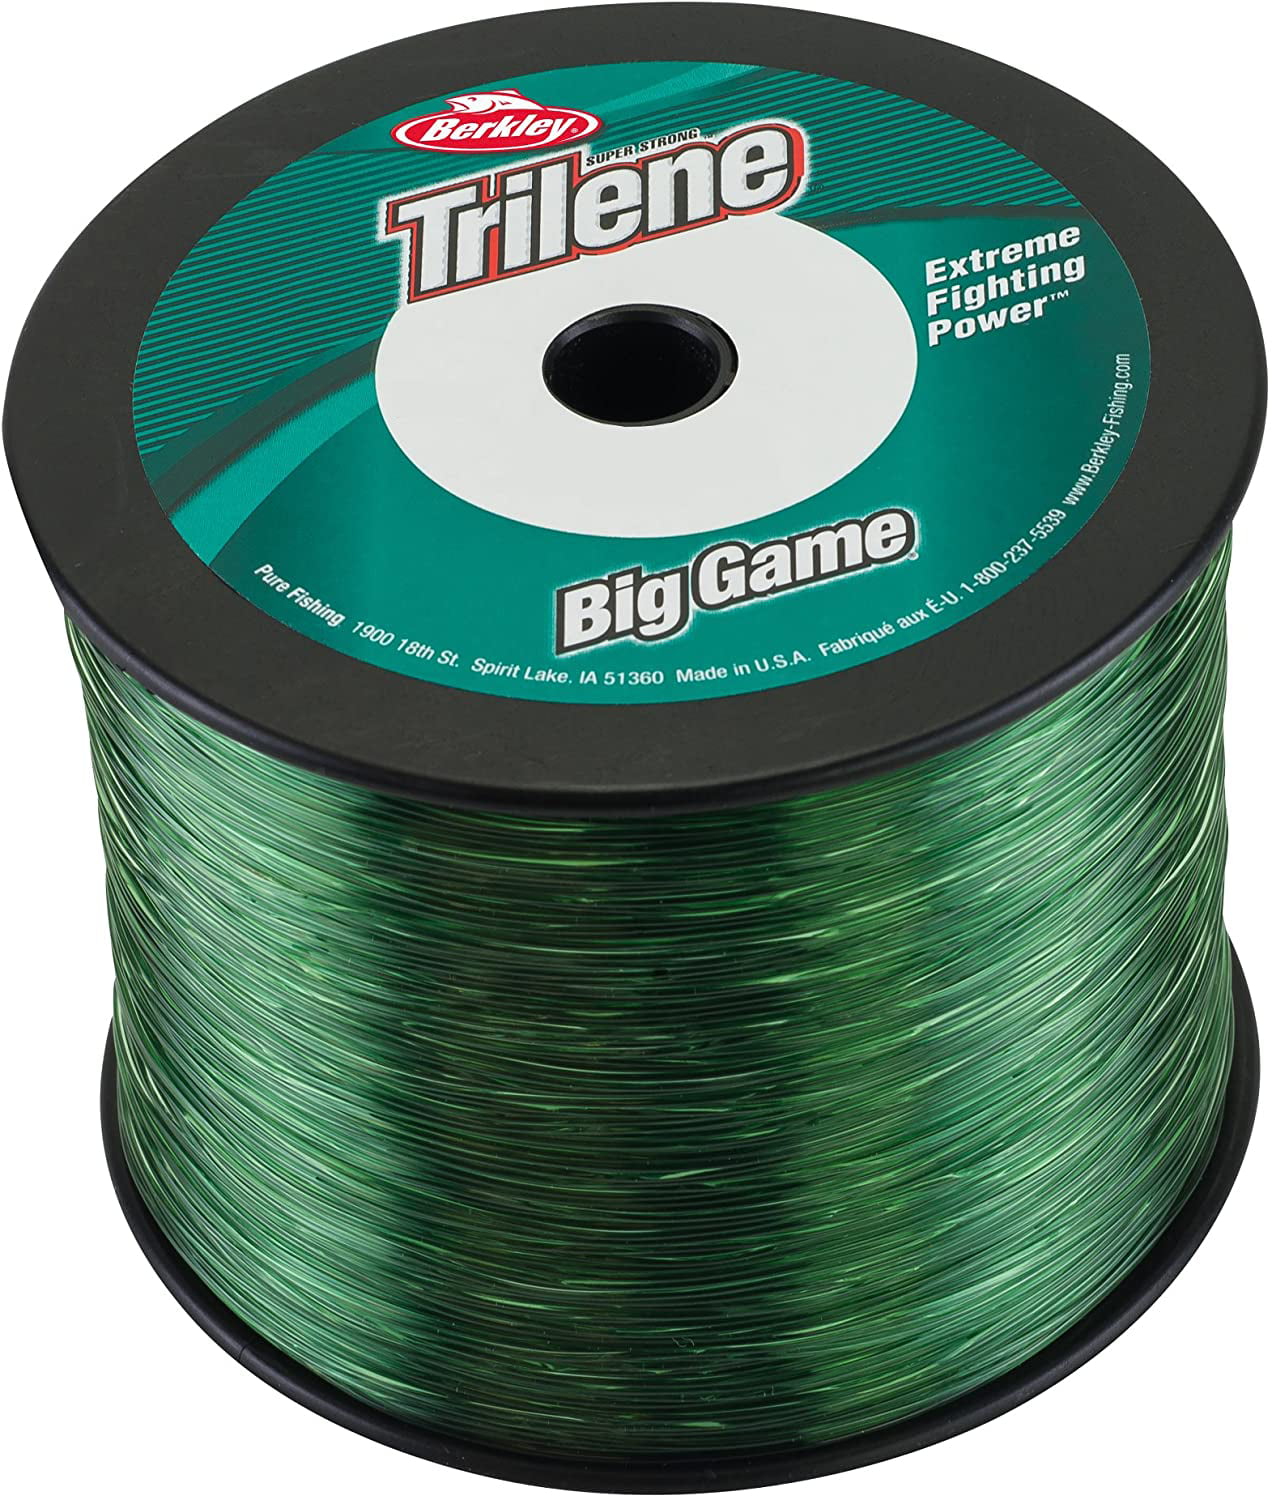 Berkley Trilene Big Game, Green, 10lb 4.5kg Monofilament Fishing Line 